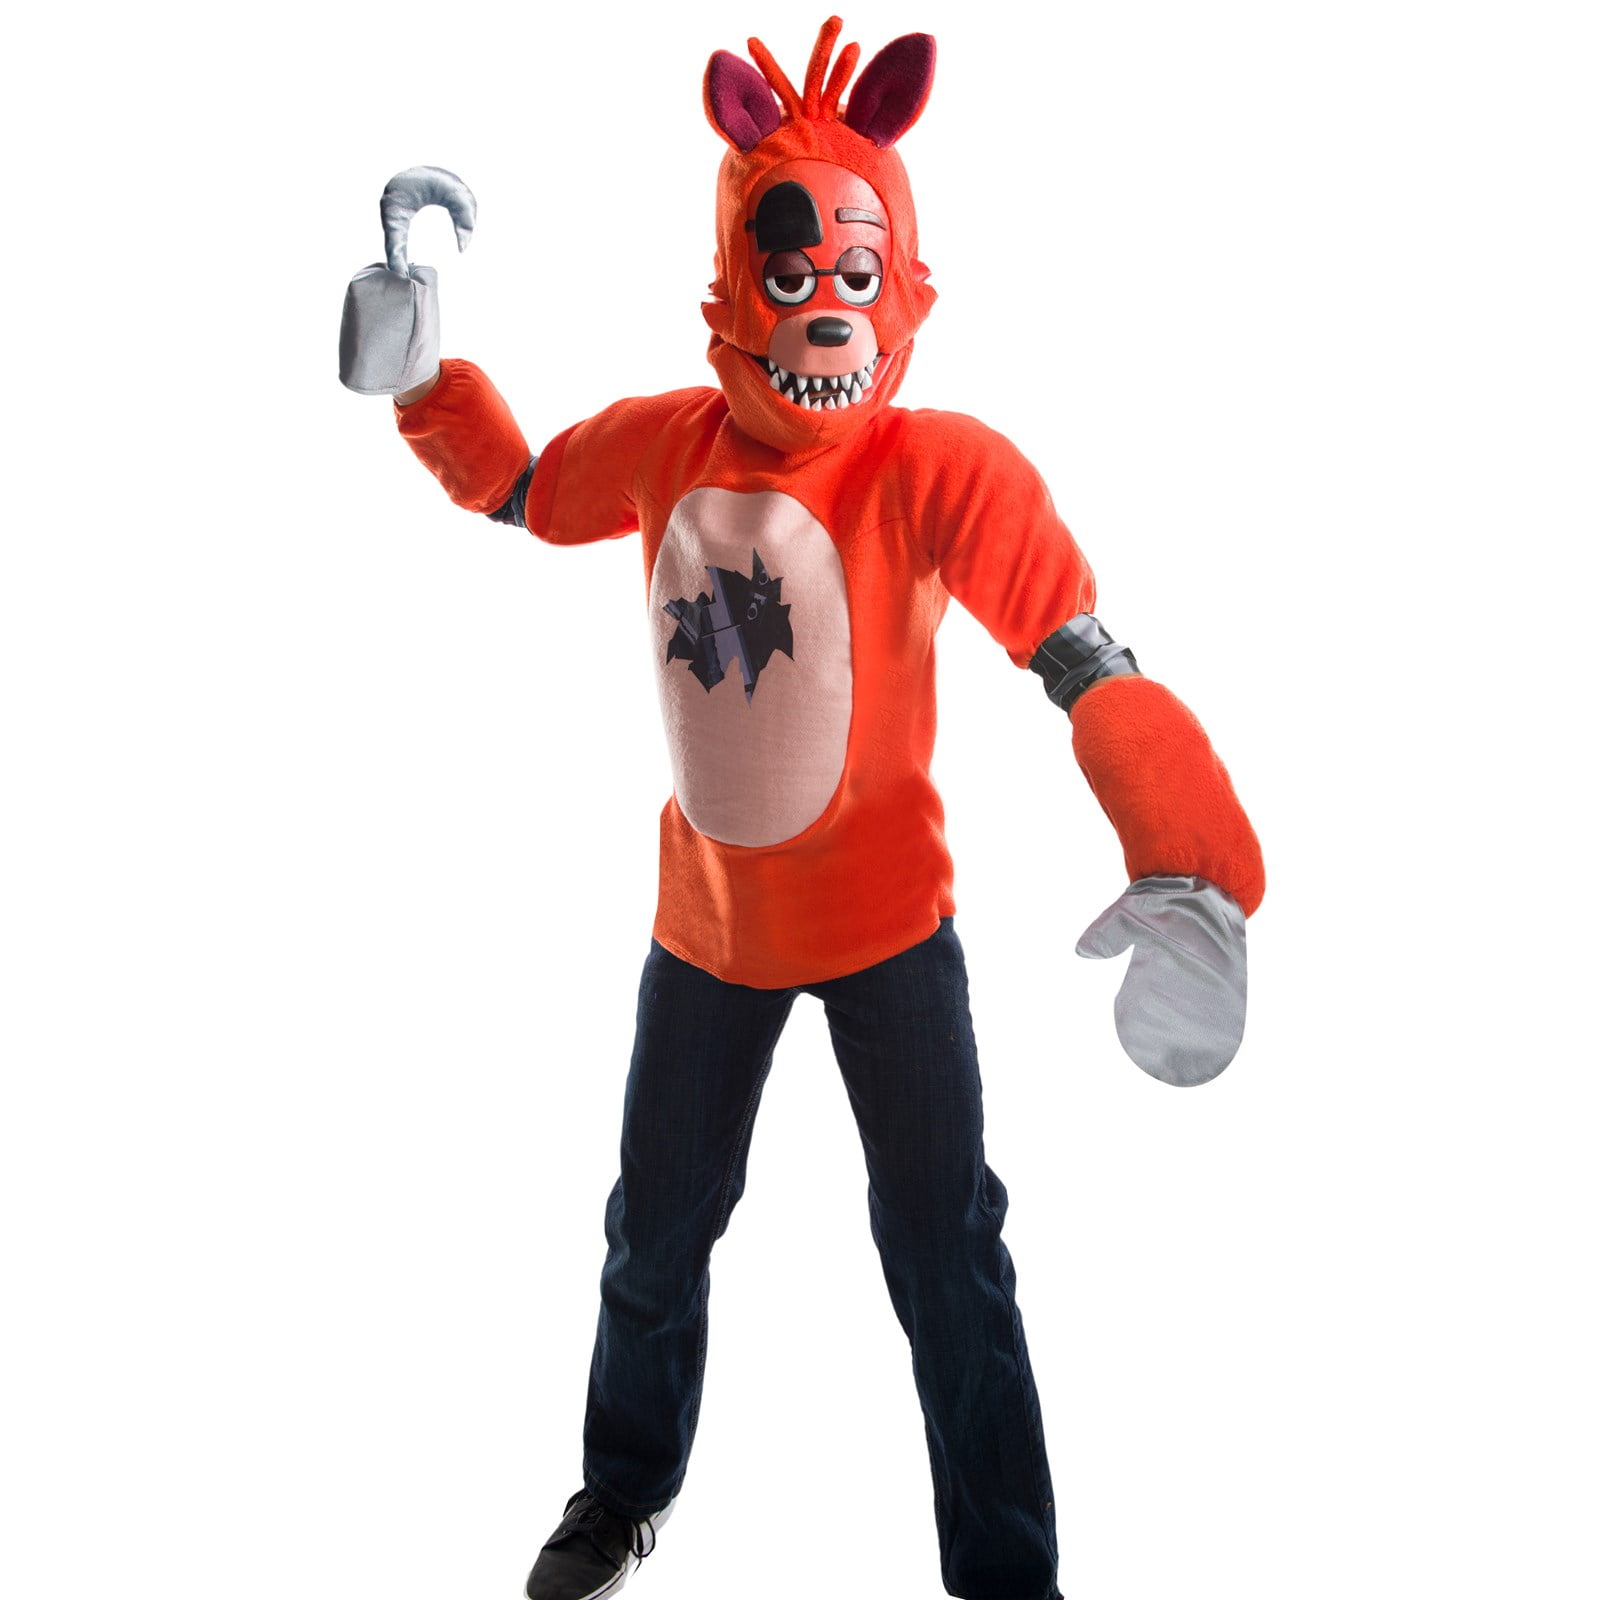 Bonnie Costume Toy Story Halloween Cosplay Costume Running 